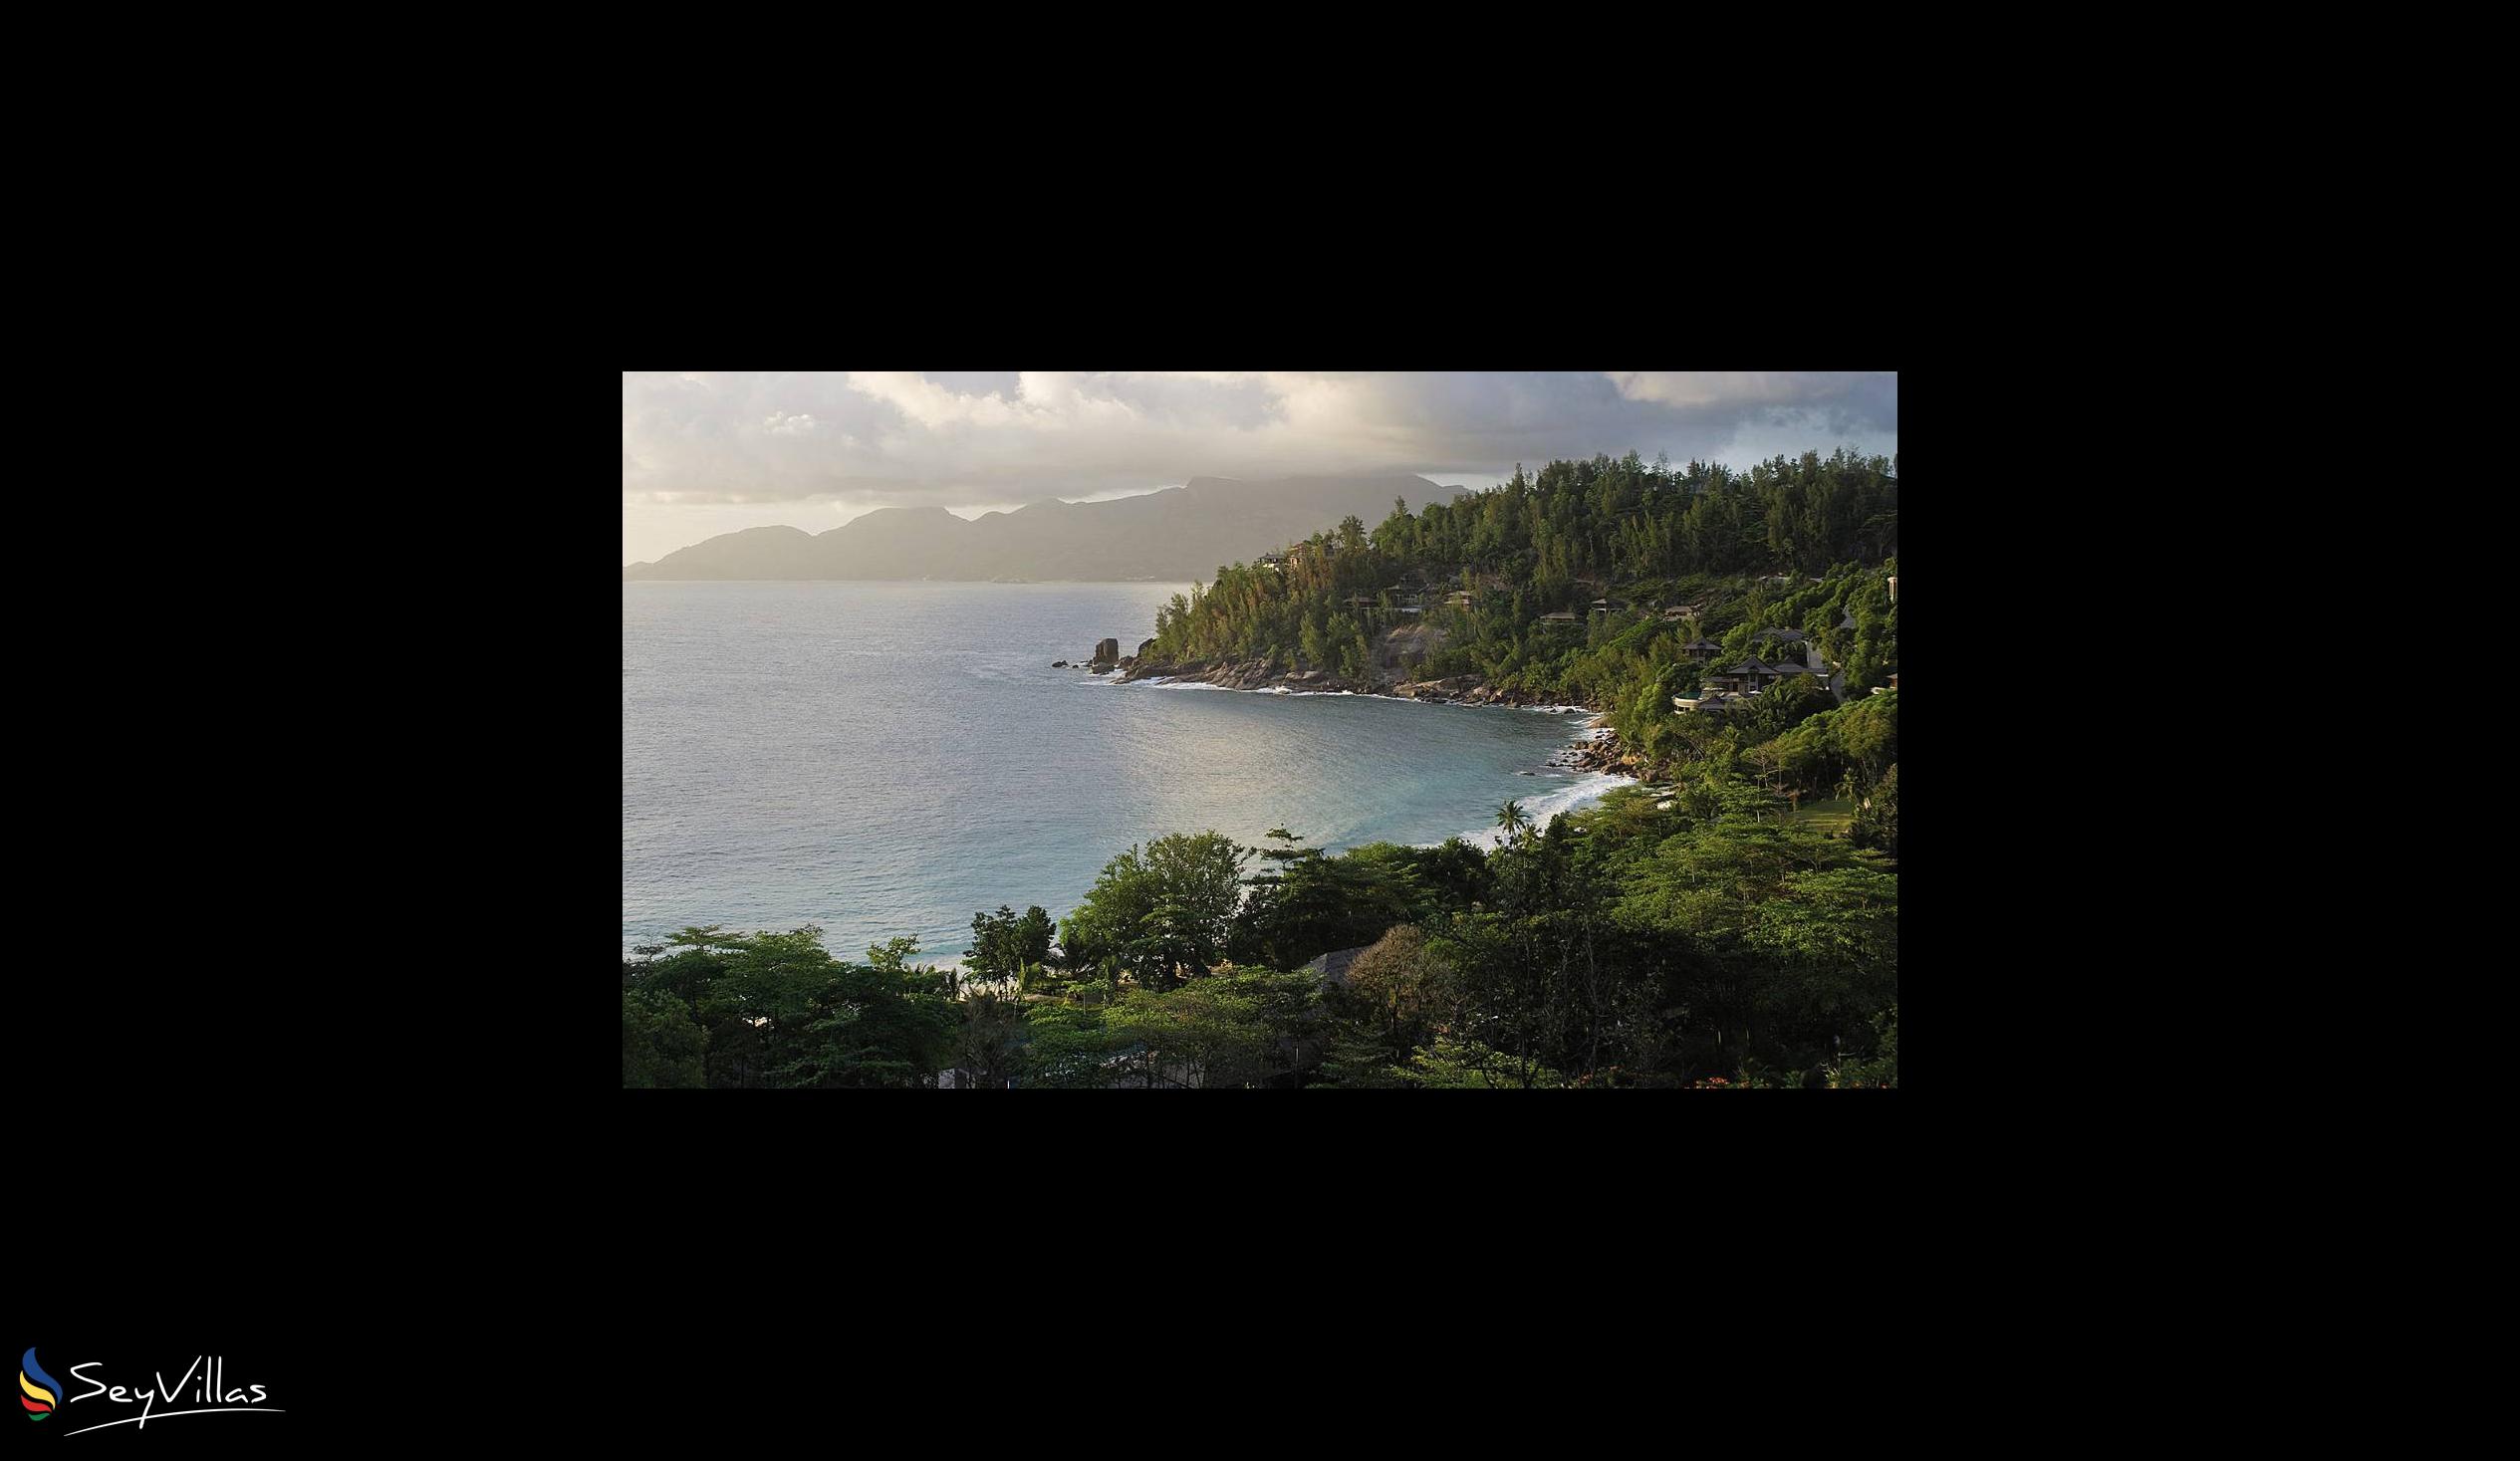 Photo 44: Four Seasons Resort - Location - Mahé (Seychelles)